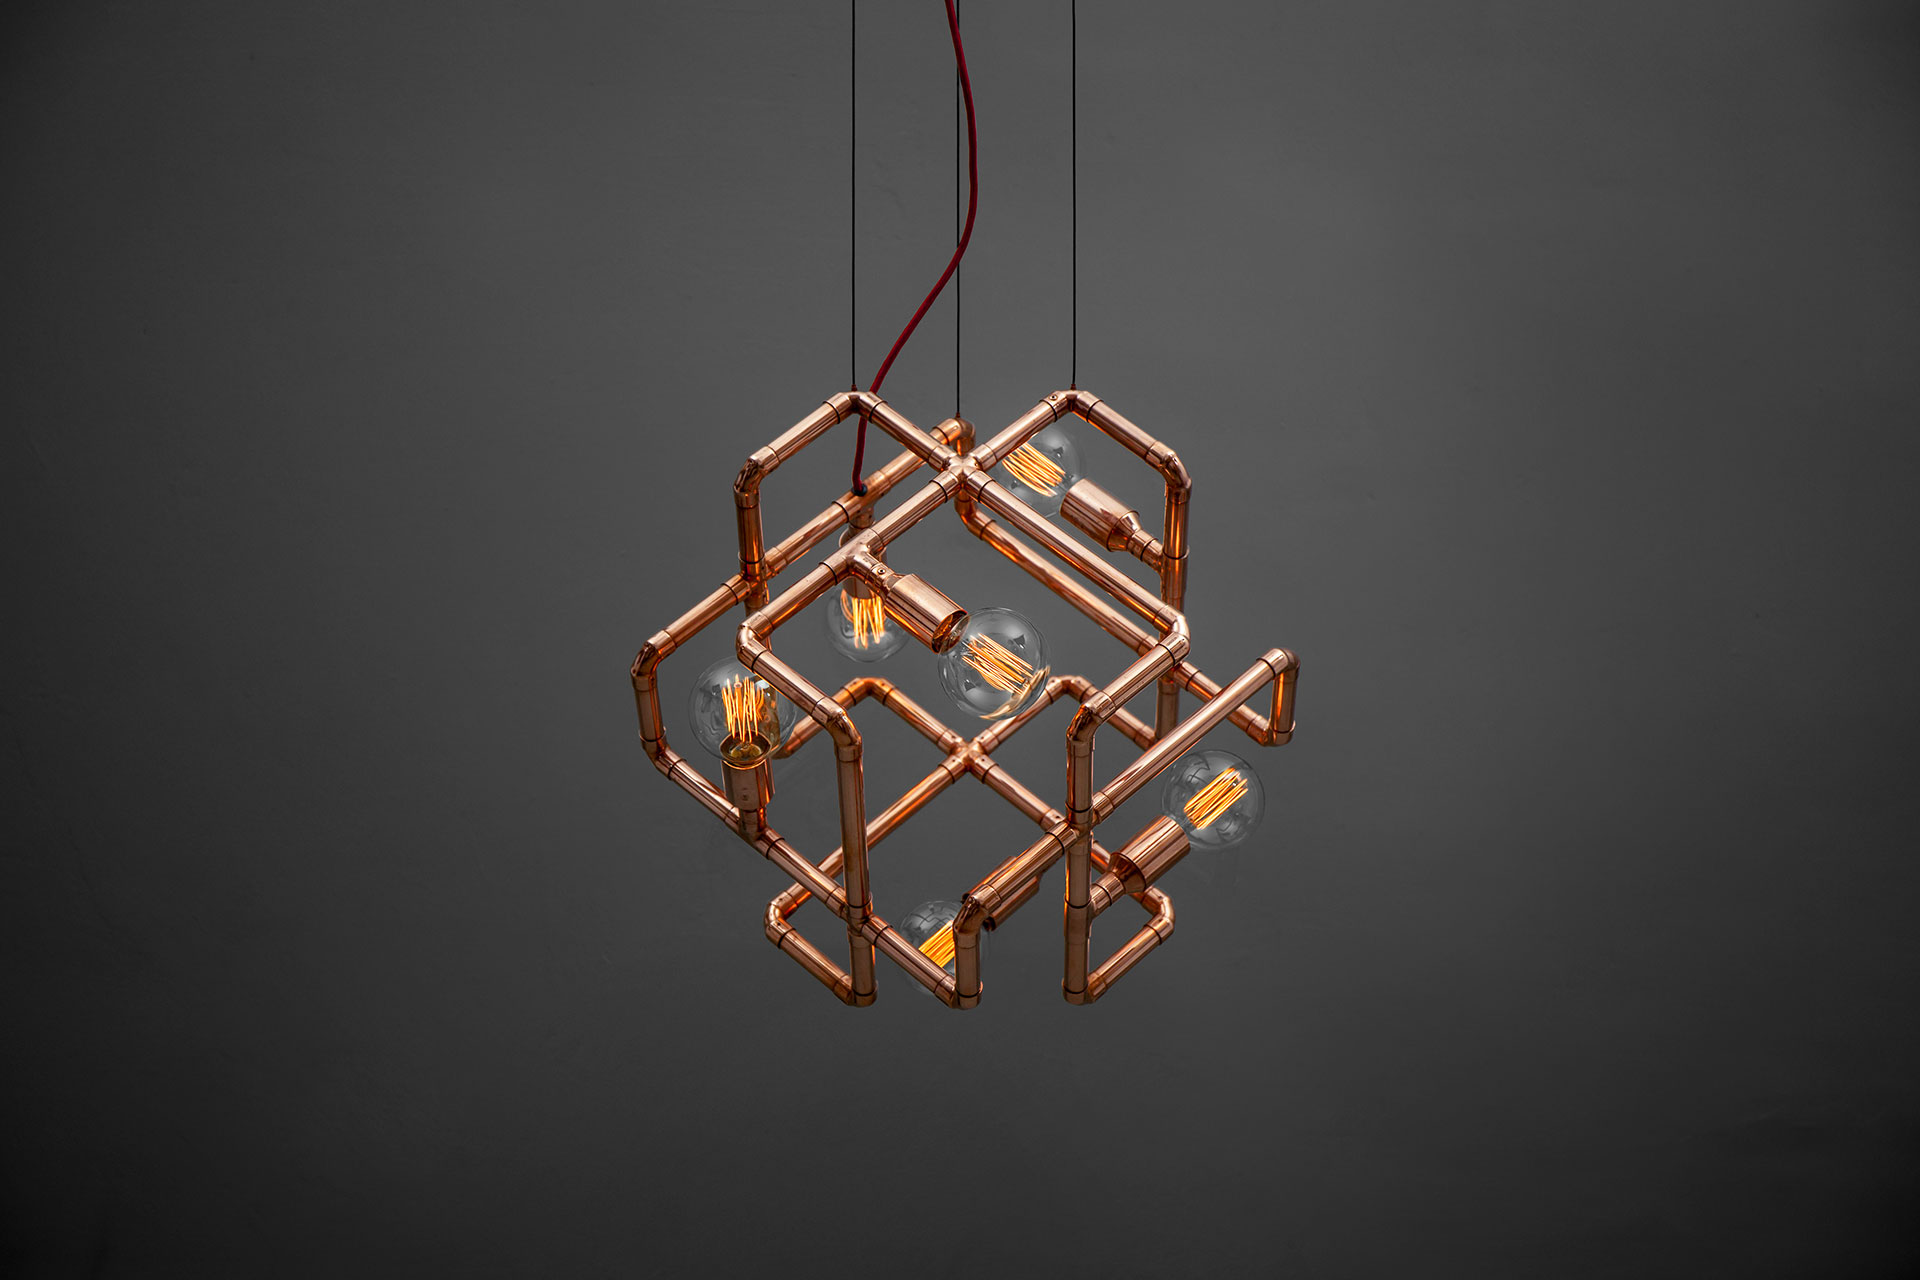 Industrial design 6-lights chandelier inspired by installation art in hotel lobby